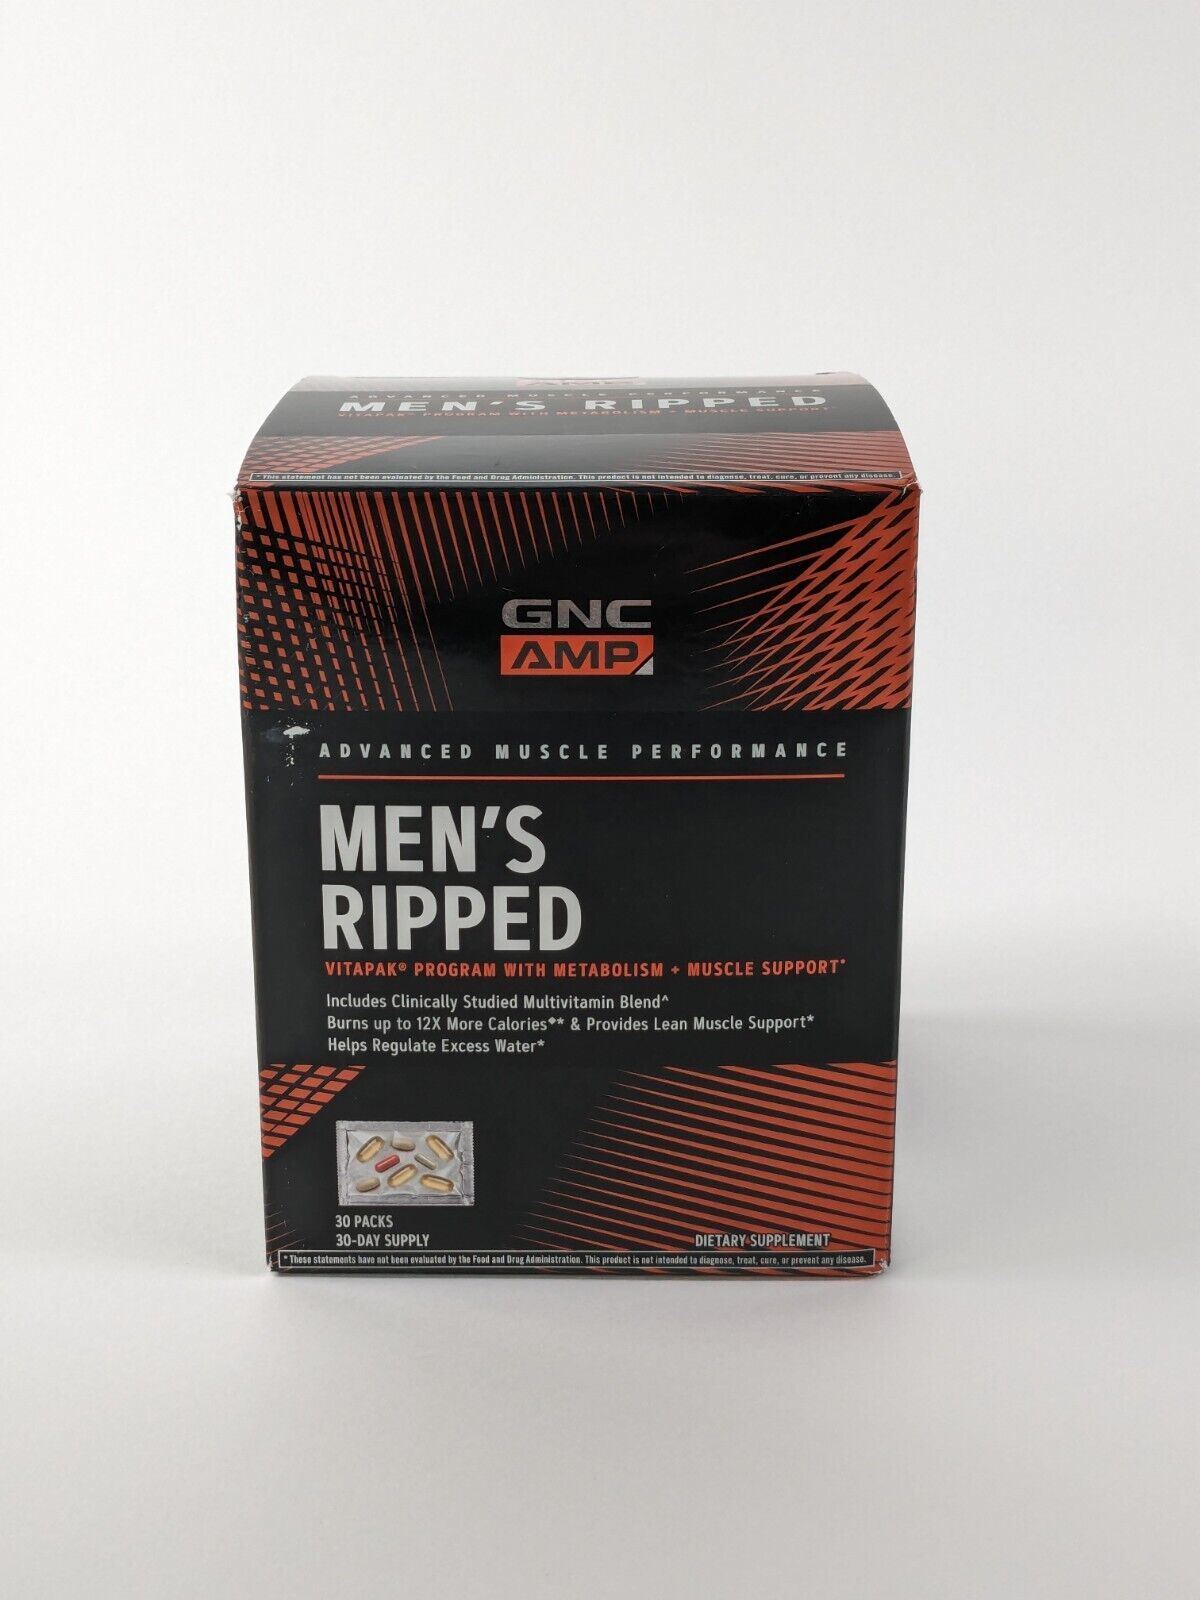 GNC AMP Men's Ripped Vitapak Program Muscle Support - 30 Capsules - $80.00